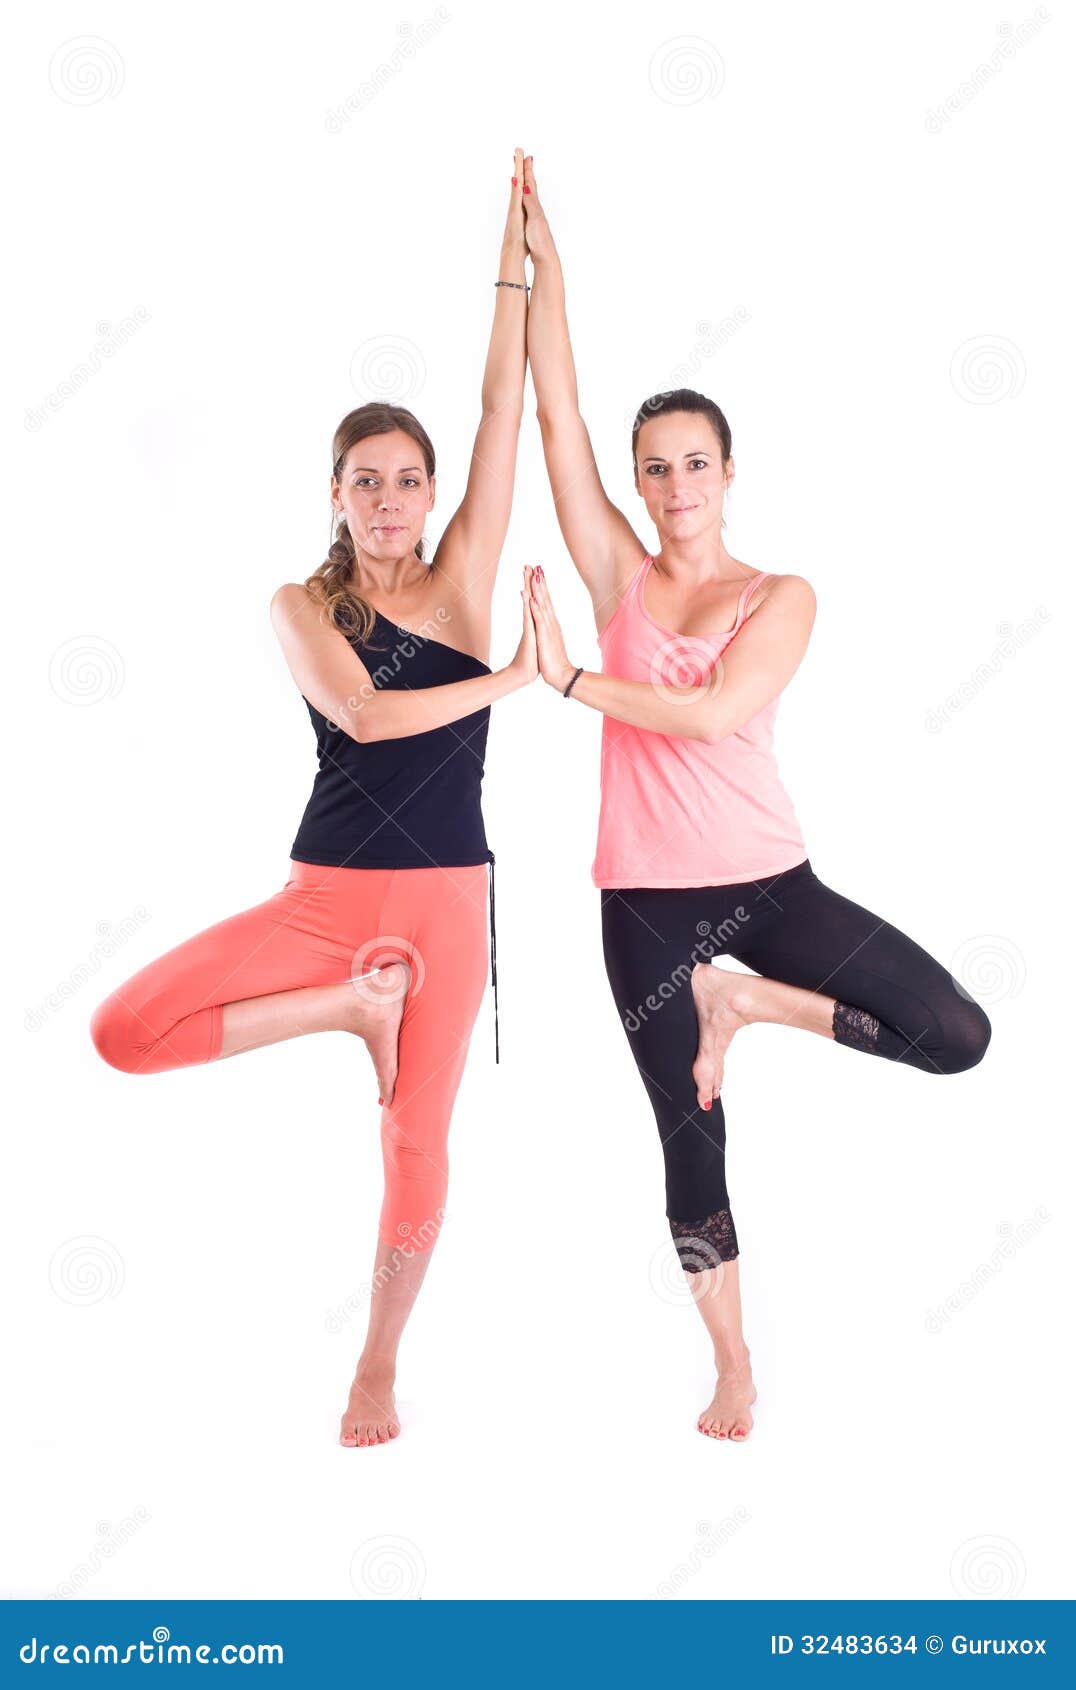 Strength for Yoga Remote Group Training — Strength for Yoga